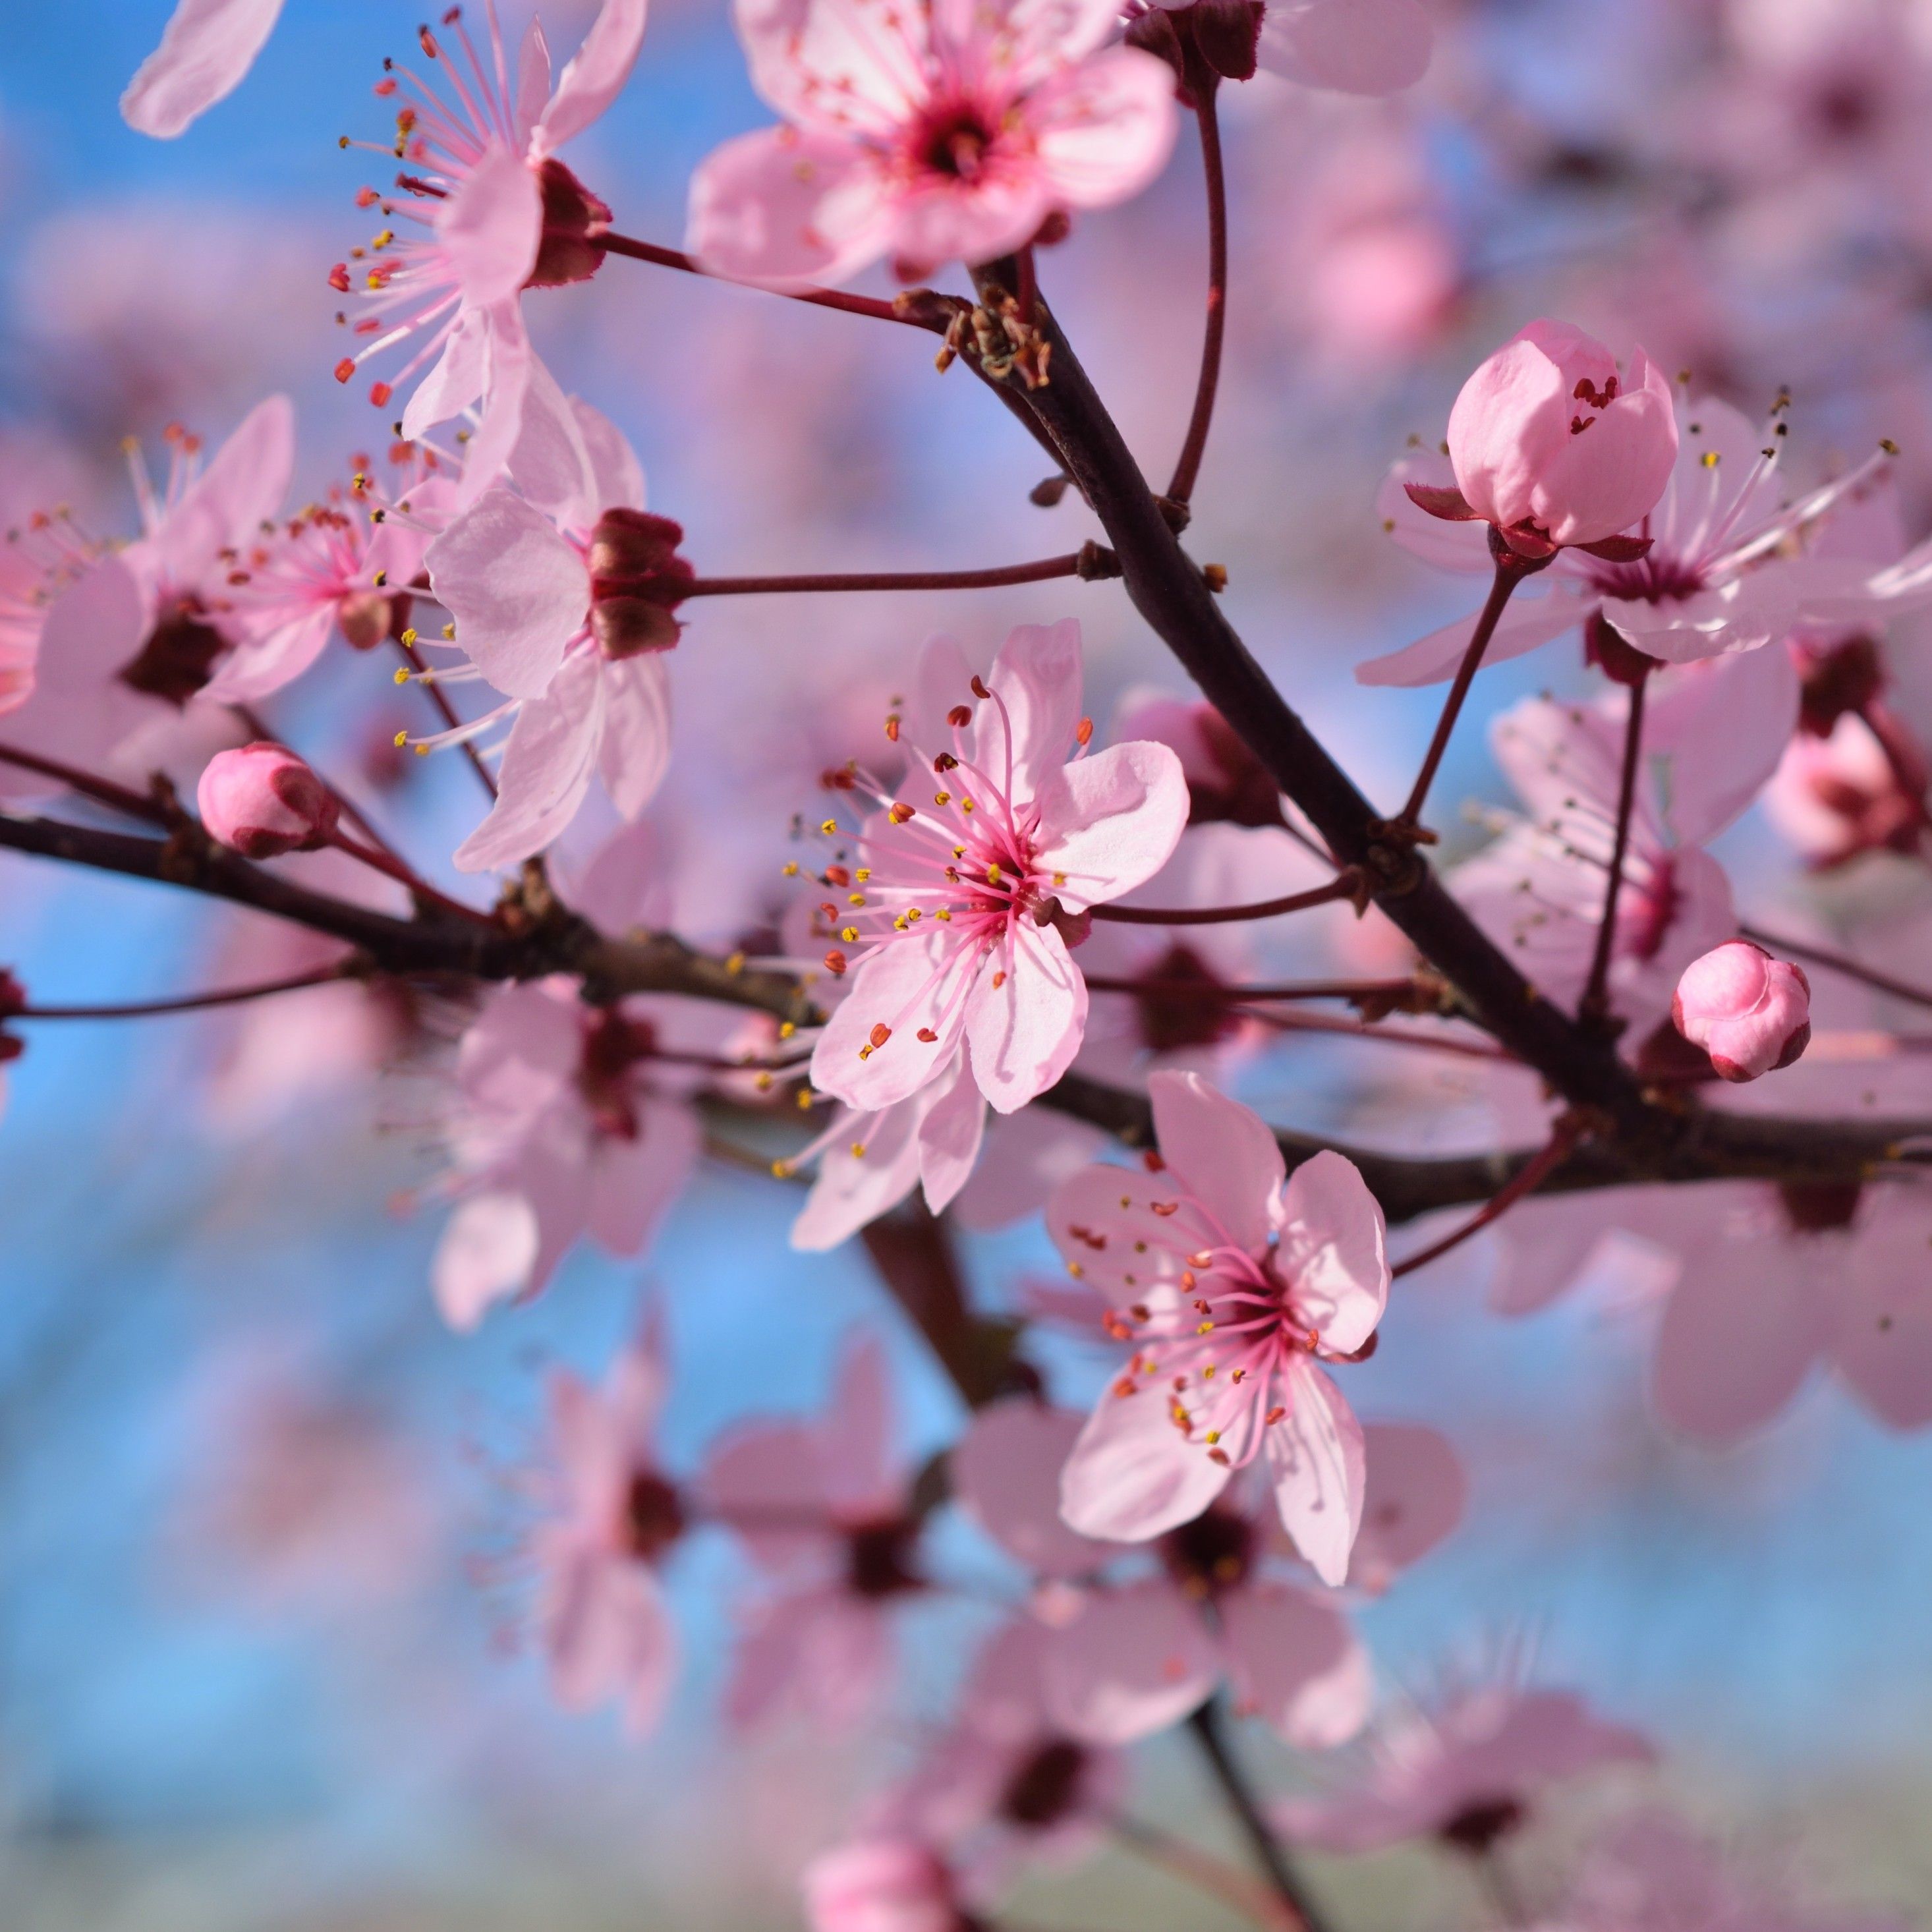 Spring Season Flowers iPad Pro Retina Display HD 4k